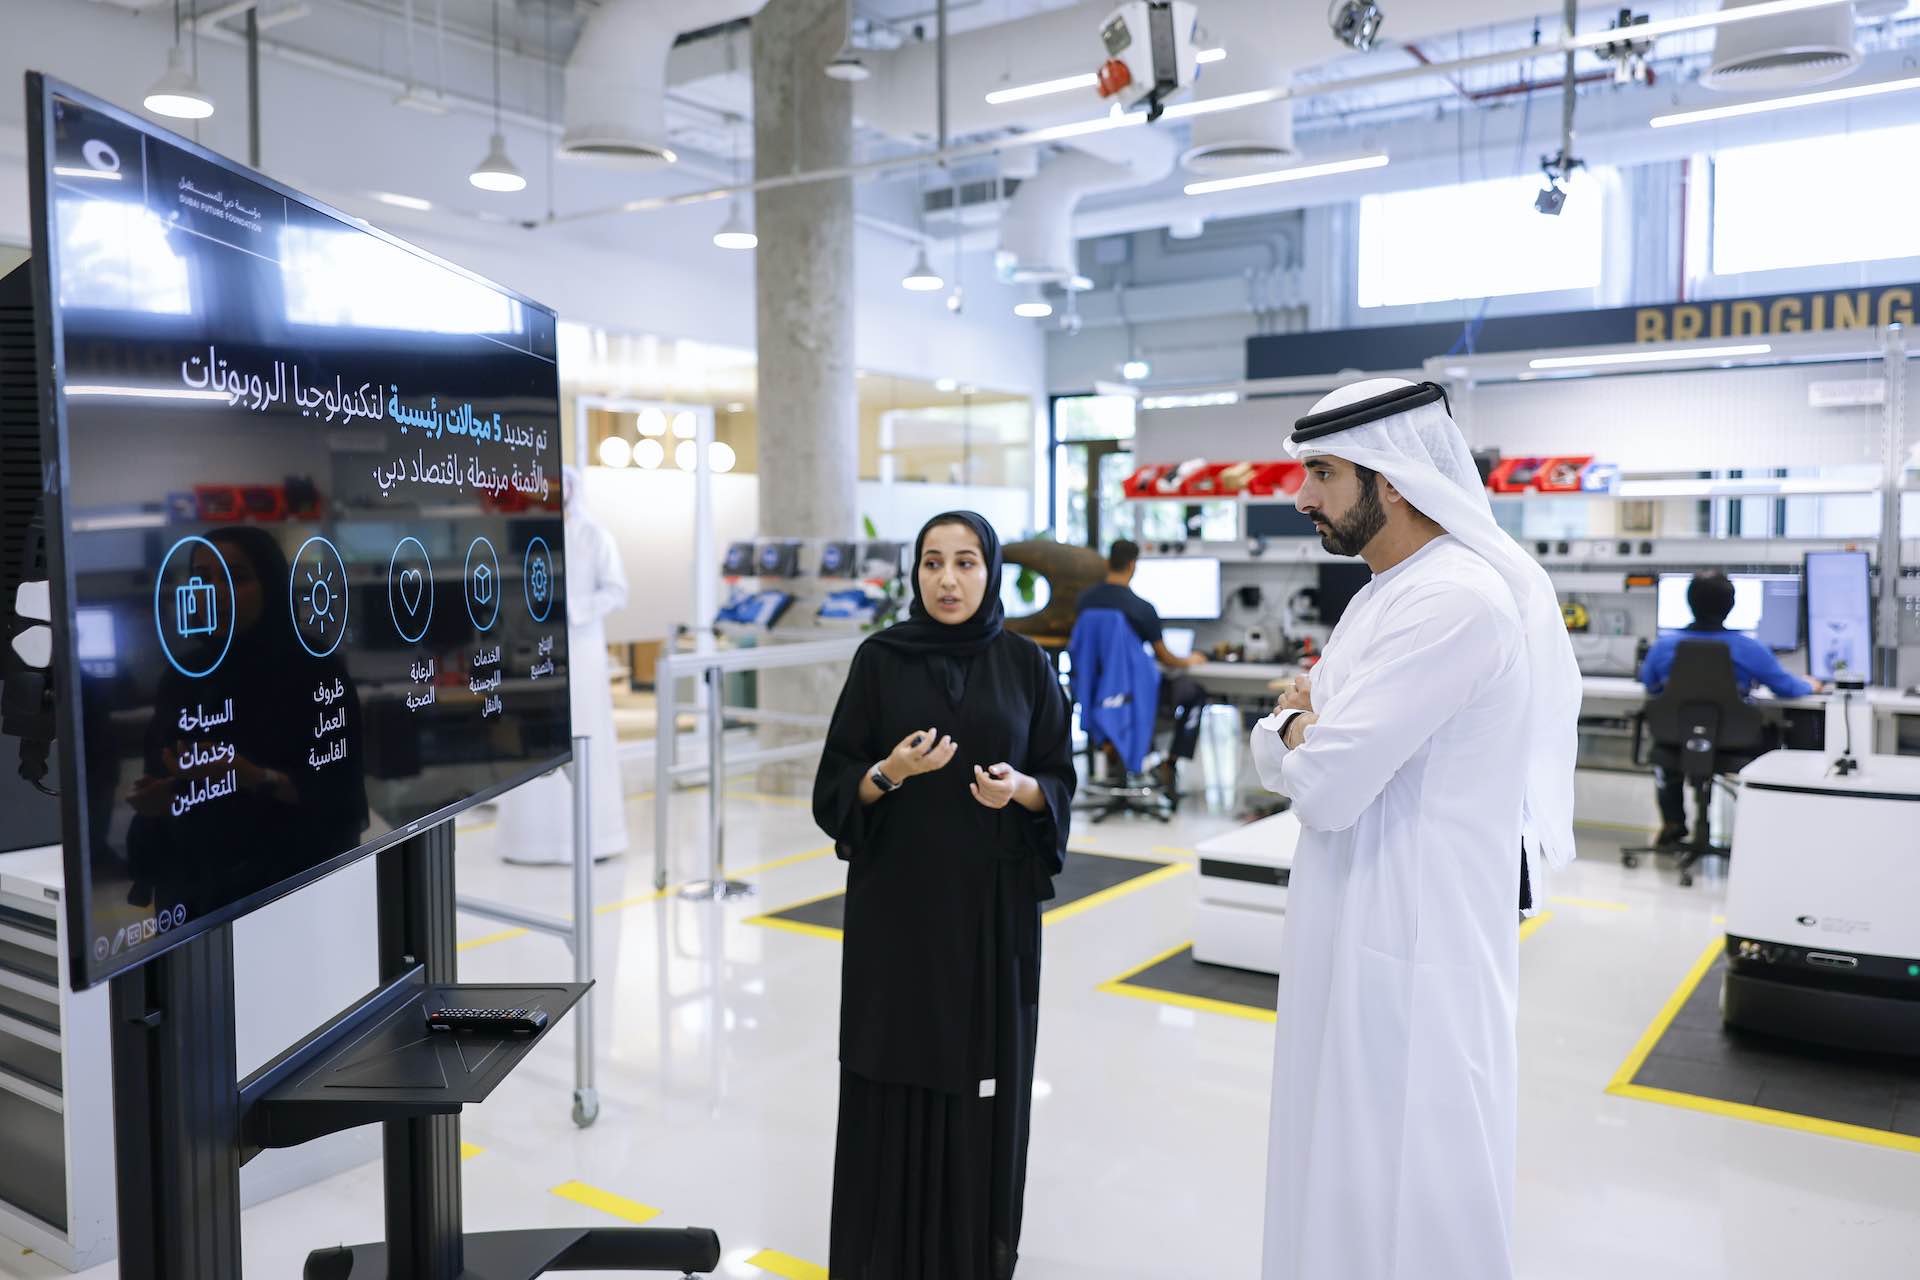 Dubai Robotics and Automation Programme launched by Sheikh Hamdan